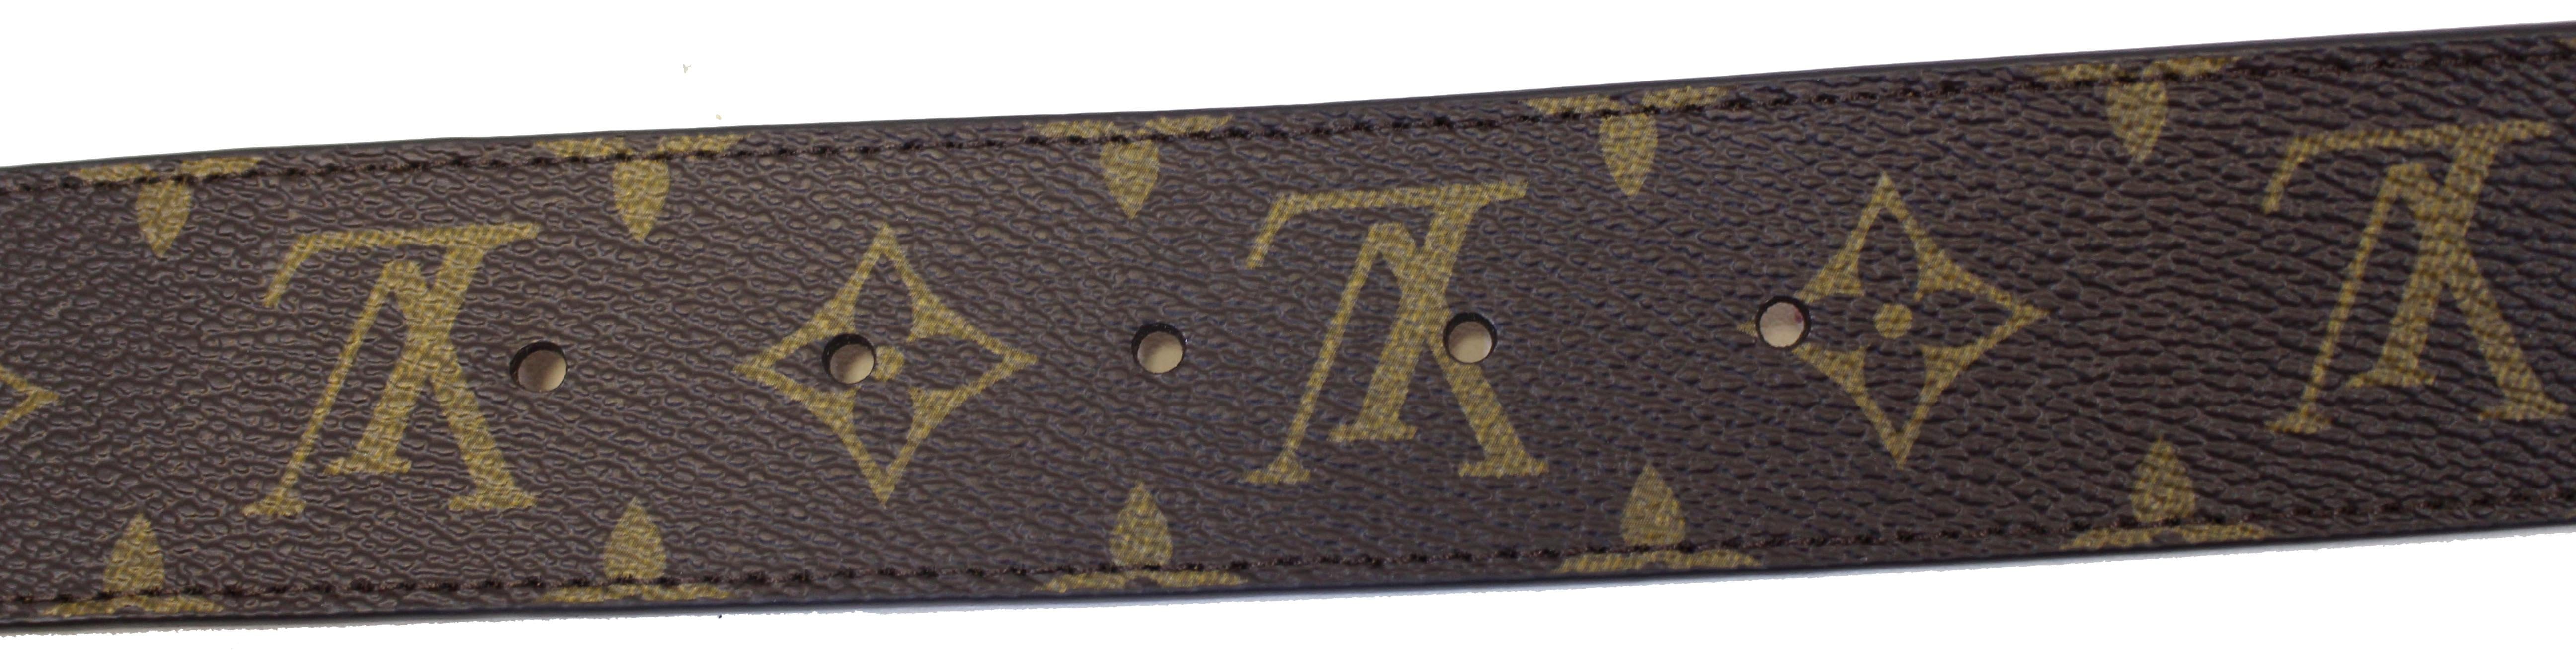 Pin by Samj on MEN COLLECTION  Lv belt, Louis vuitton belt, Louis vuitton  monogram bag